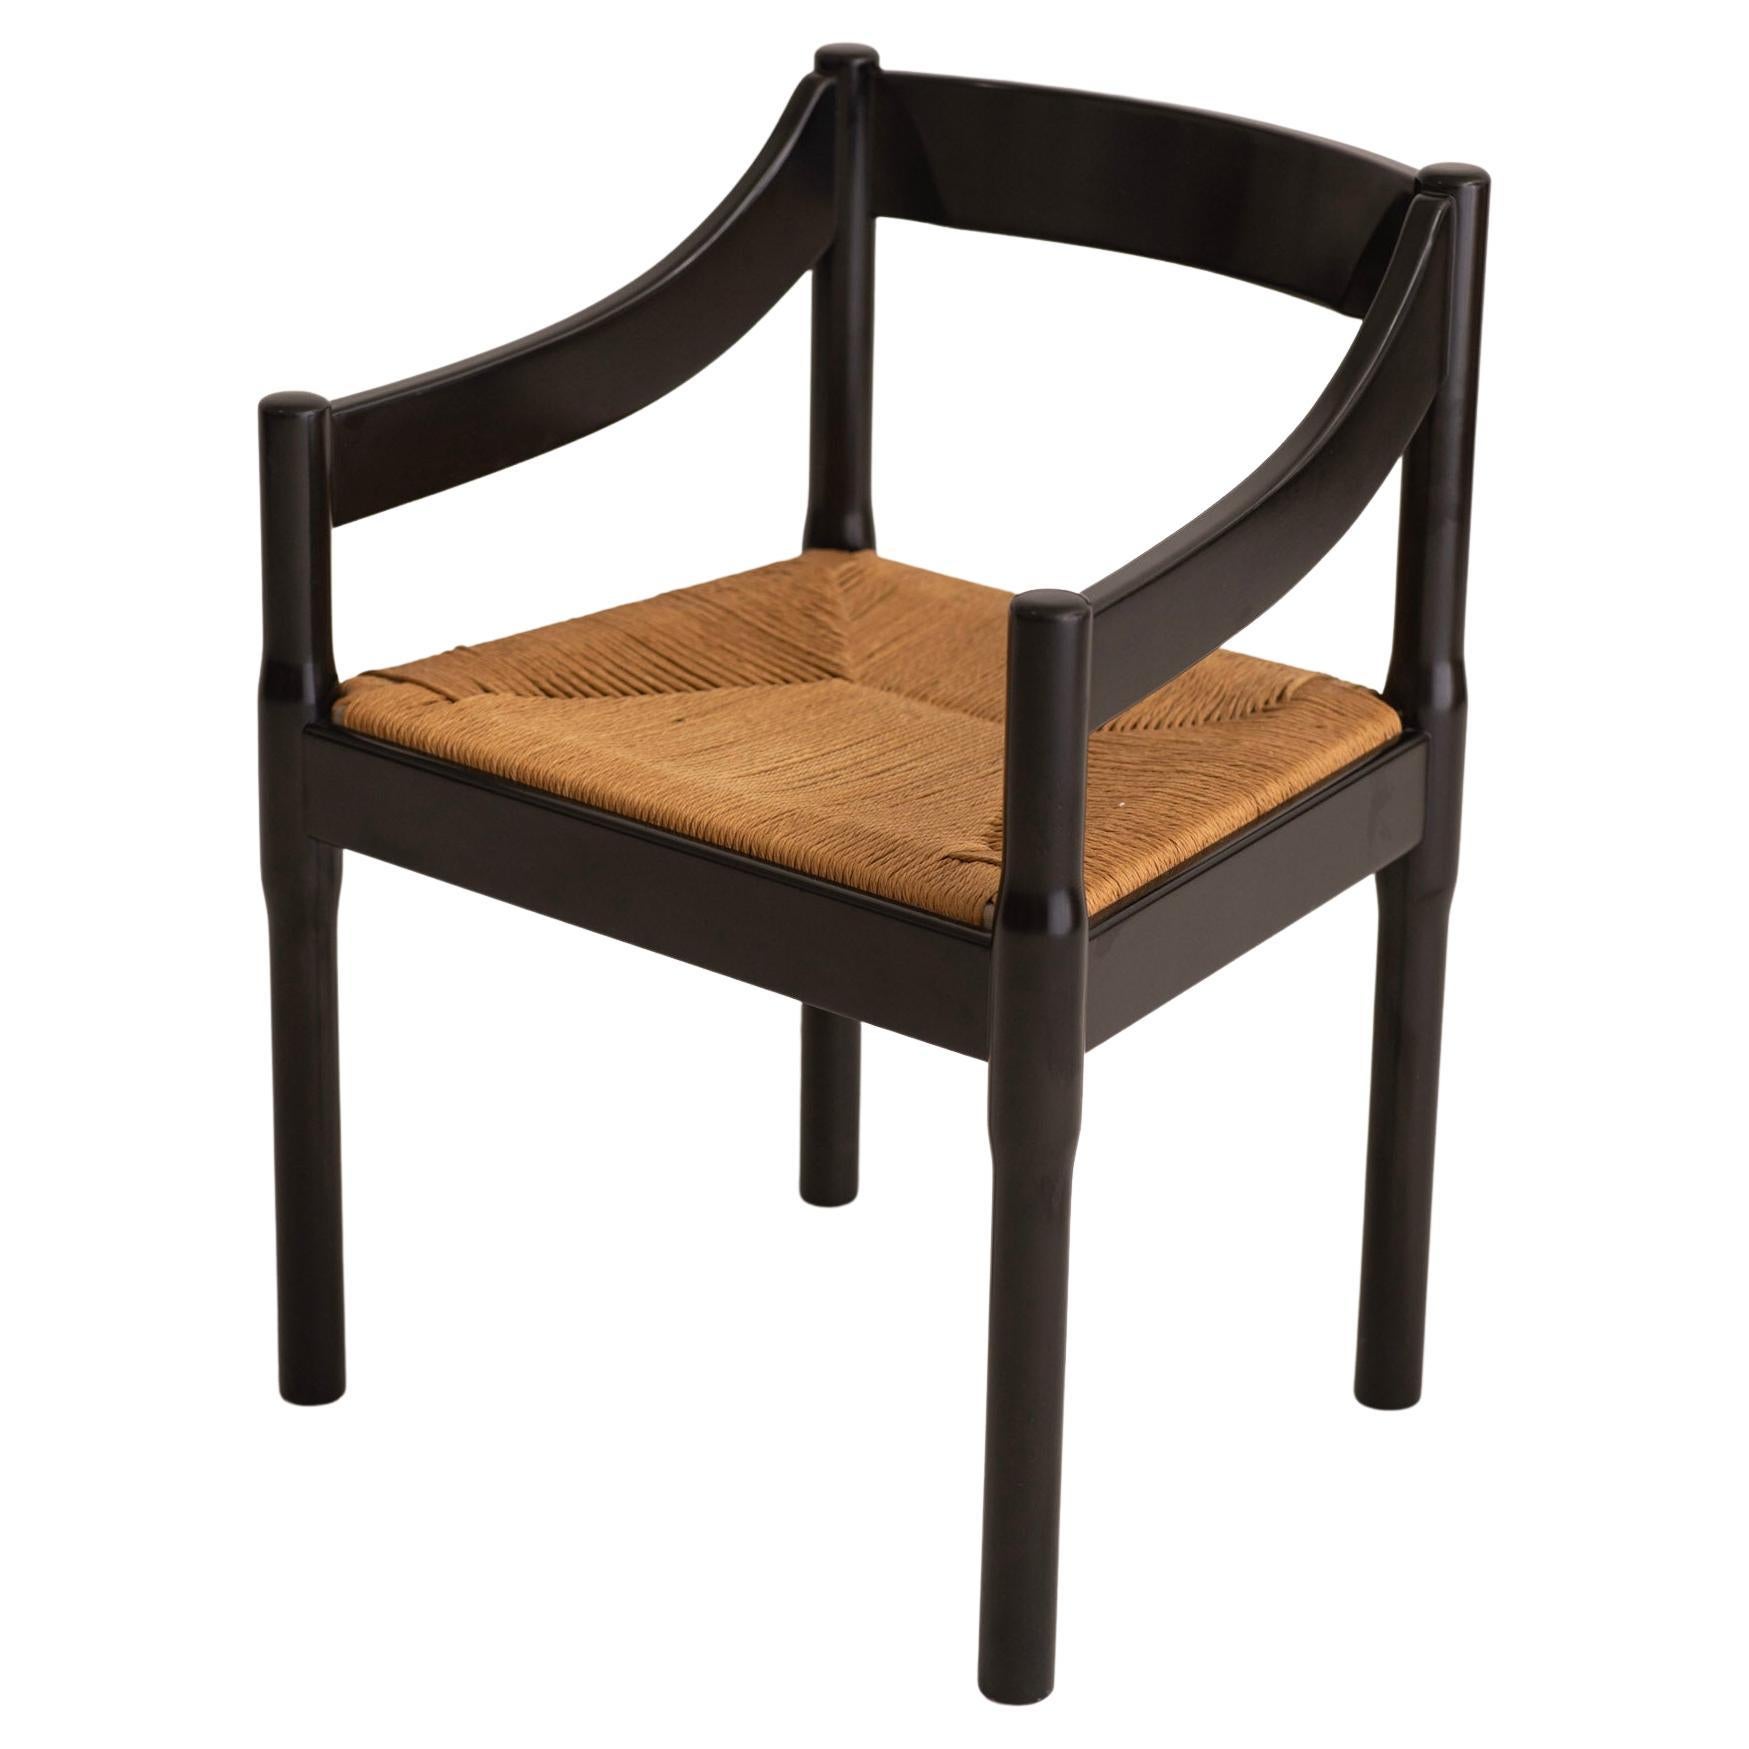 Vico Magistretti “Carimate” Chair by Stendig